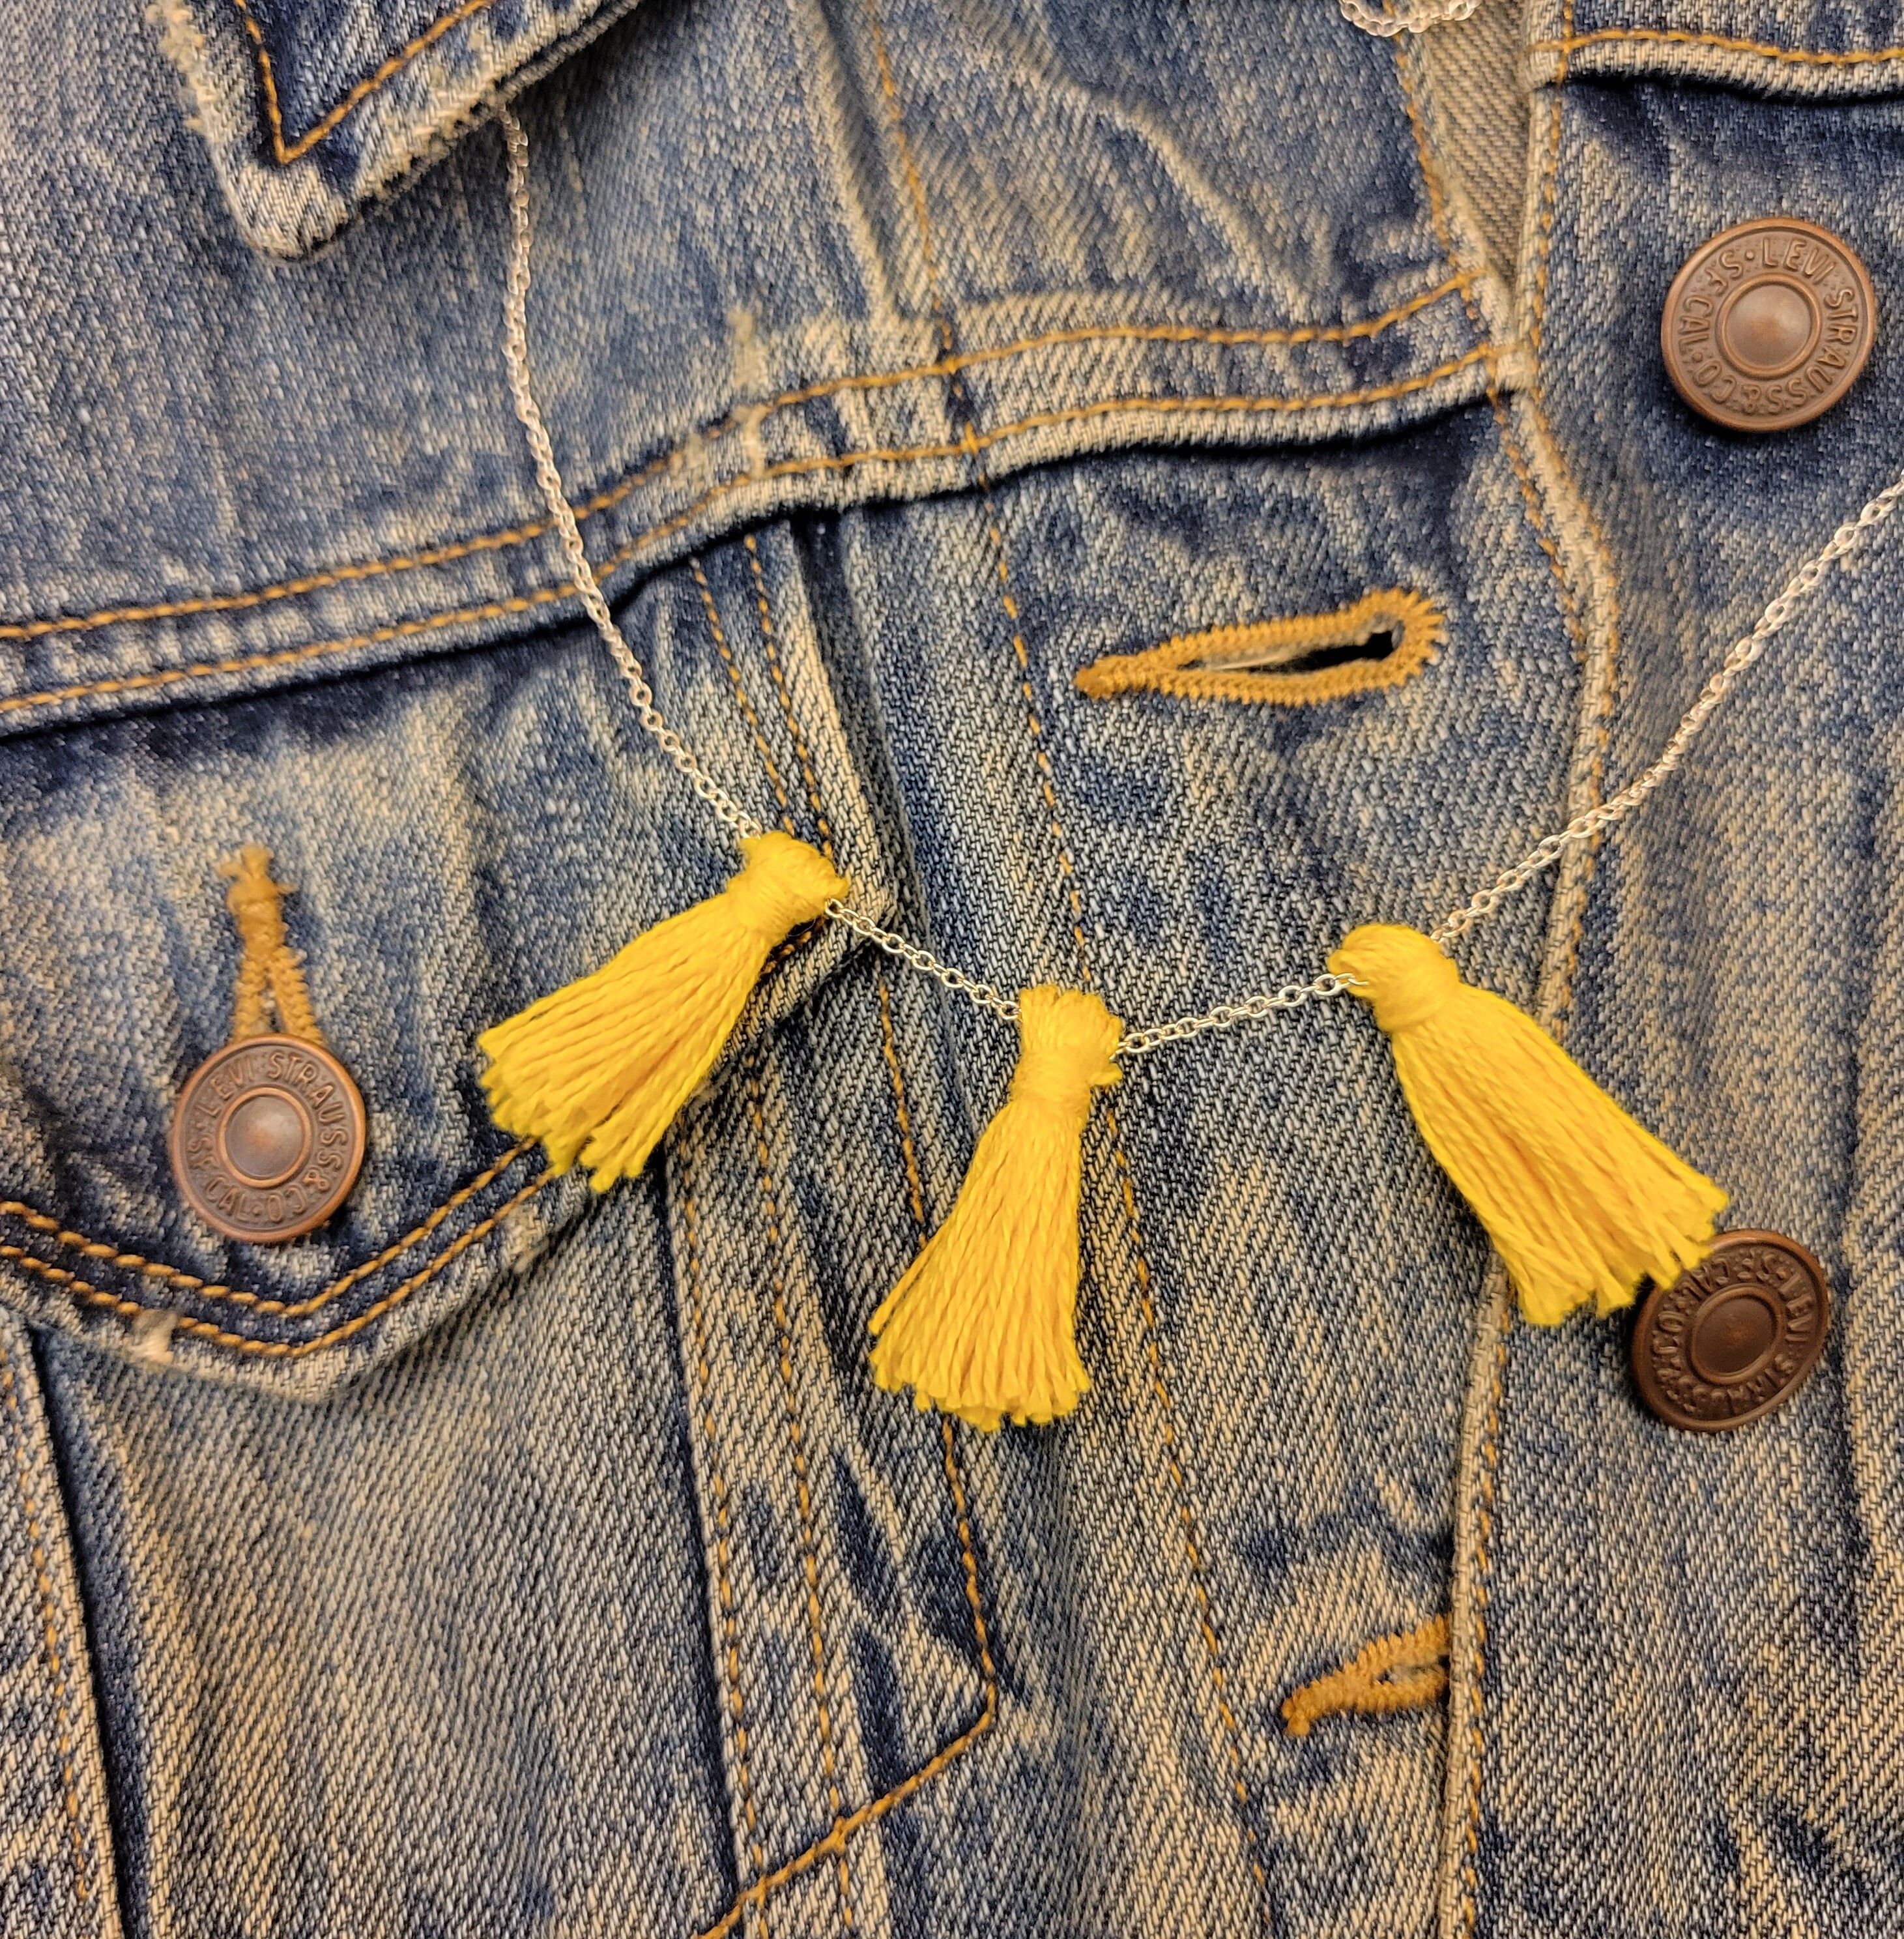 Creativebug for Teens & Adults: Tassel Necklace